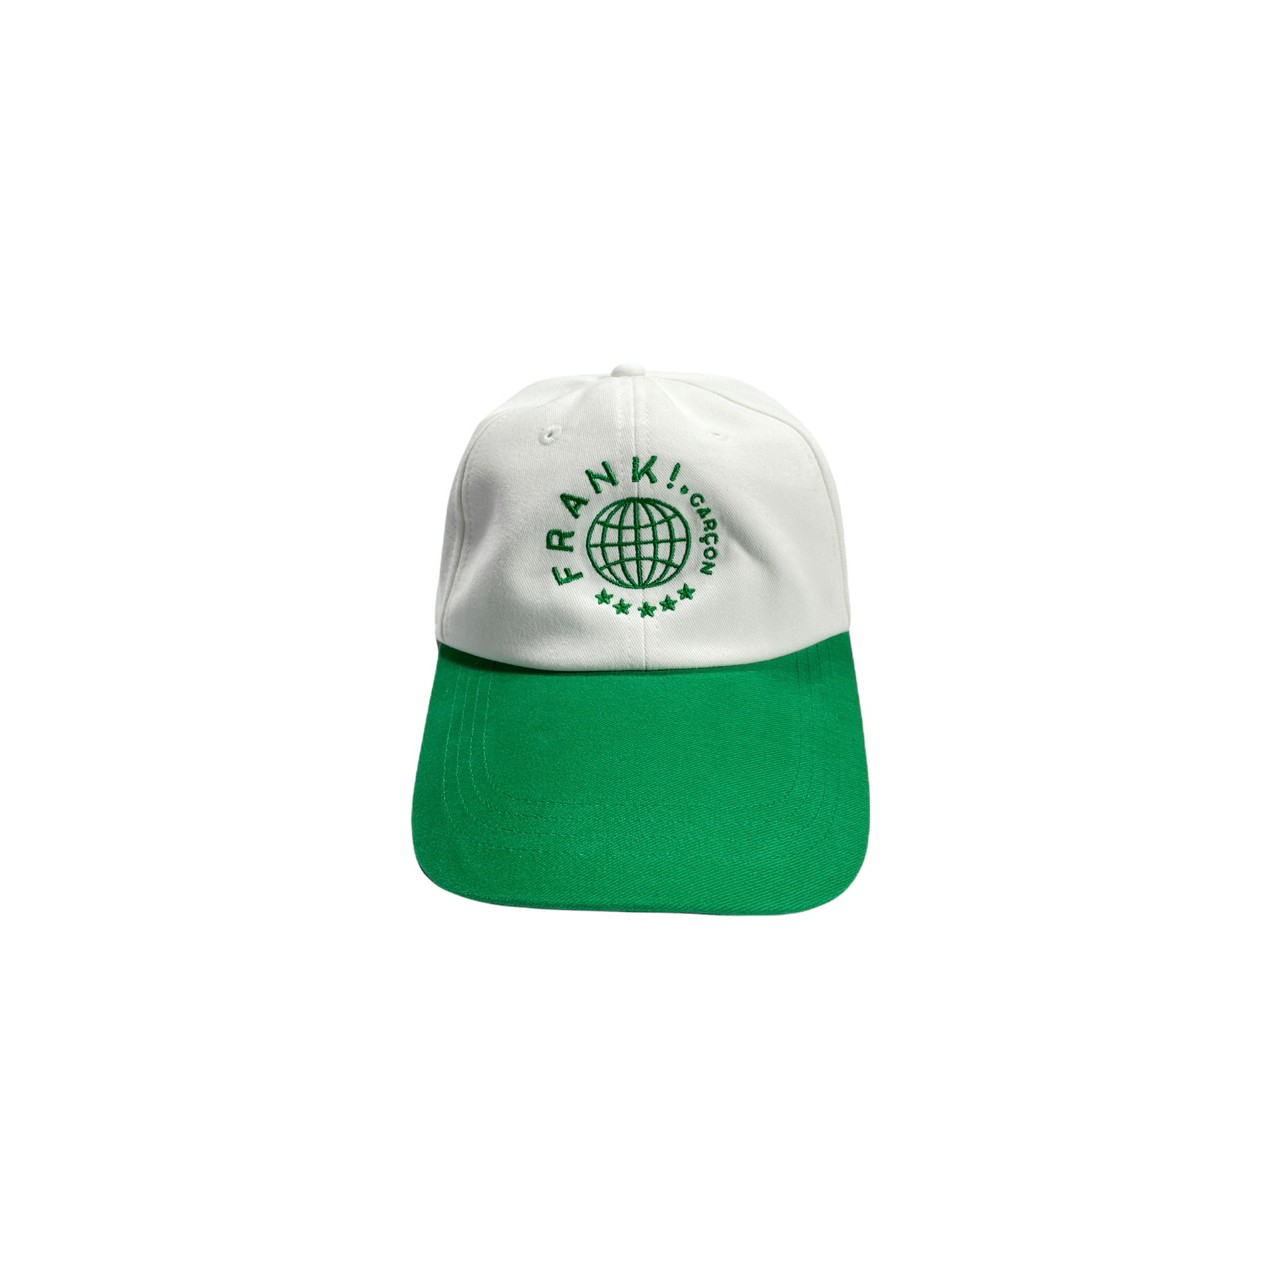 Eric two-tone cap (Green)